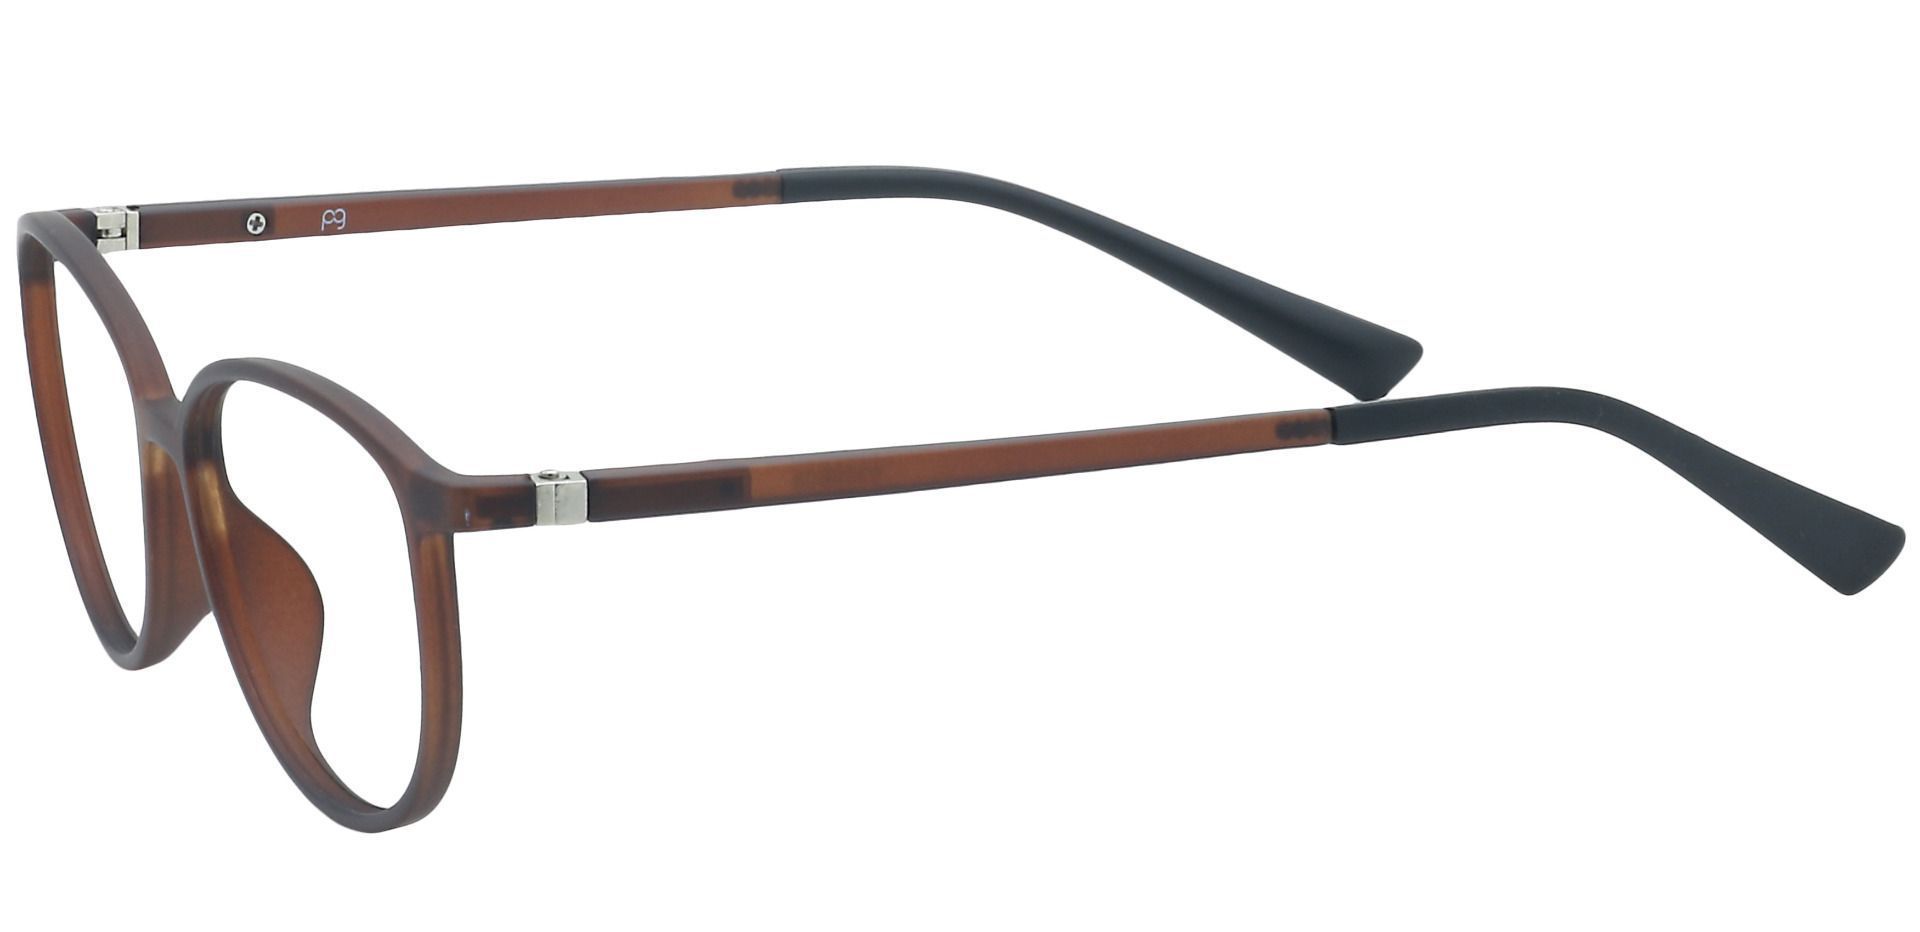 Melbourne Oval Lined Bifocal Glasses - Brown